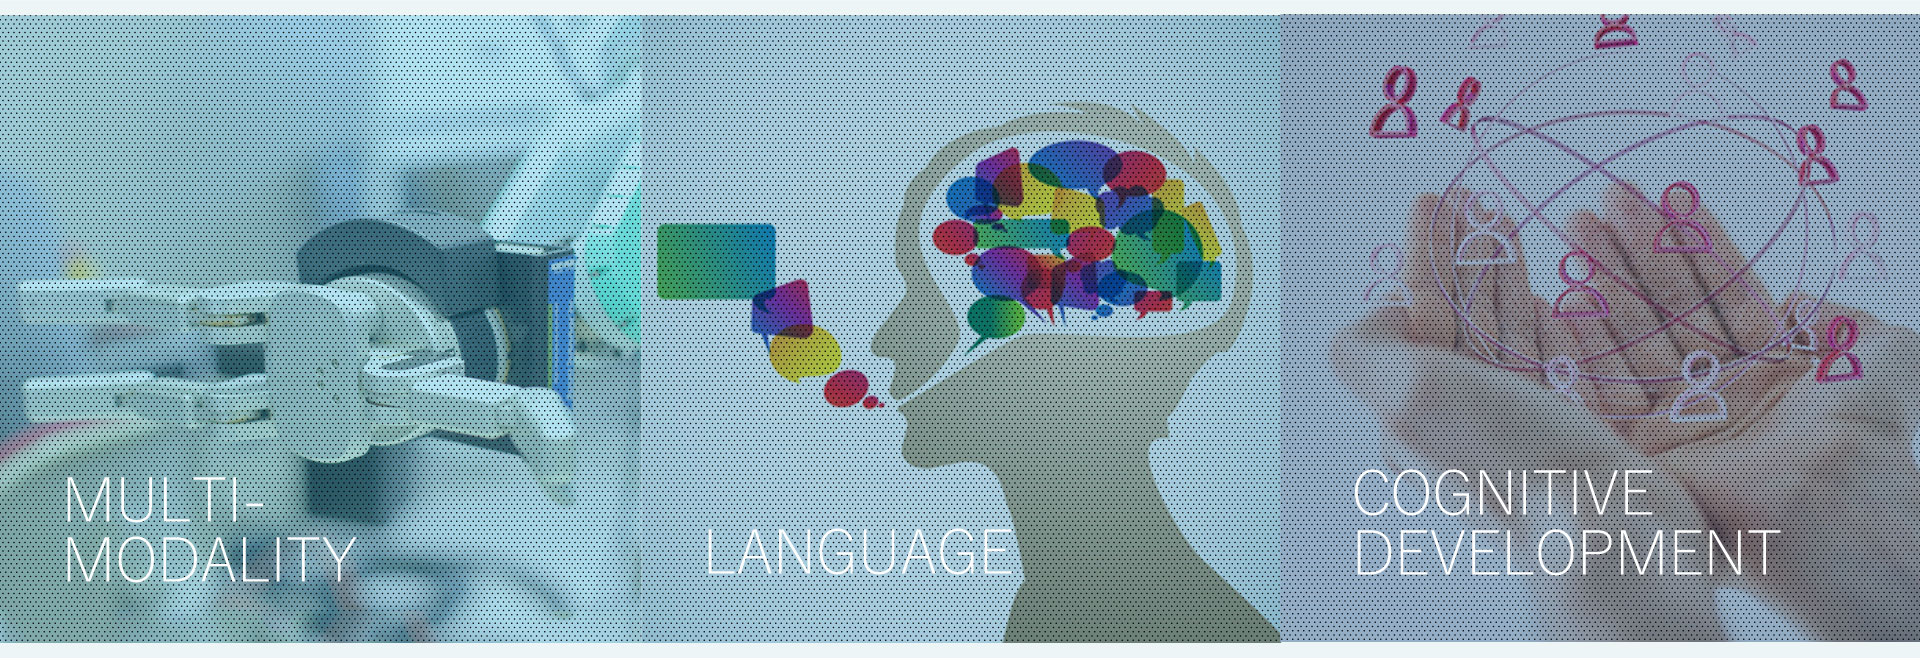 Multi-modality,Language,Cognitive Development